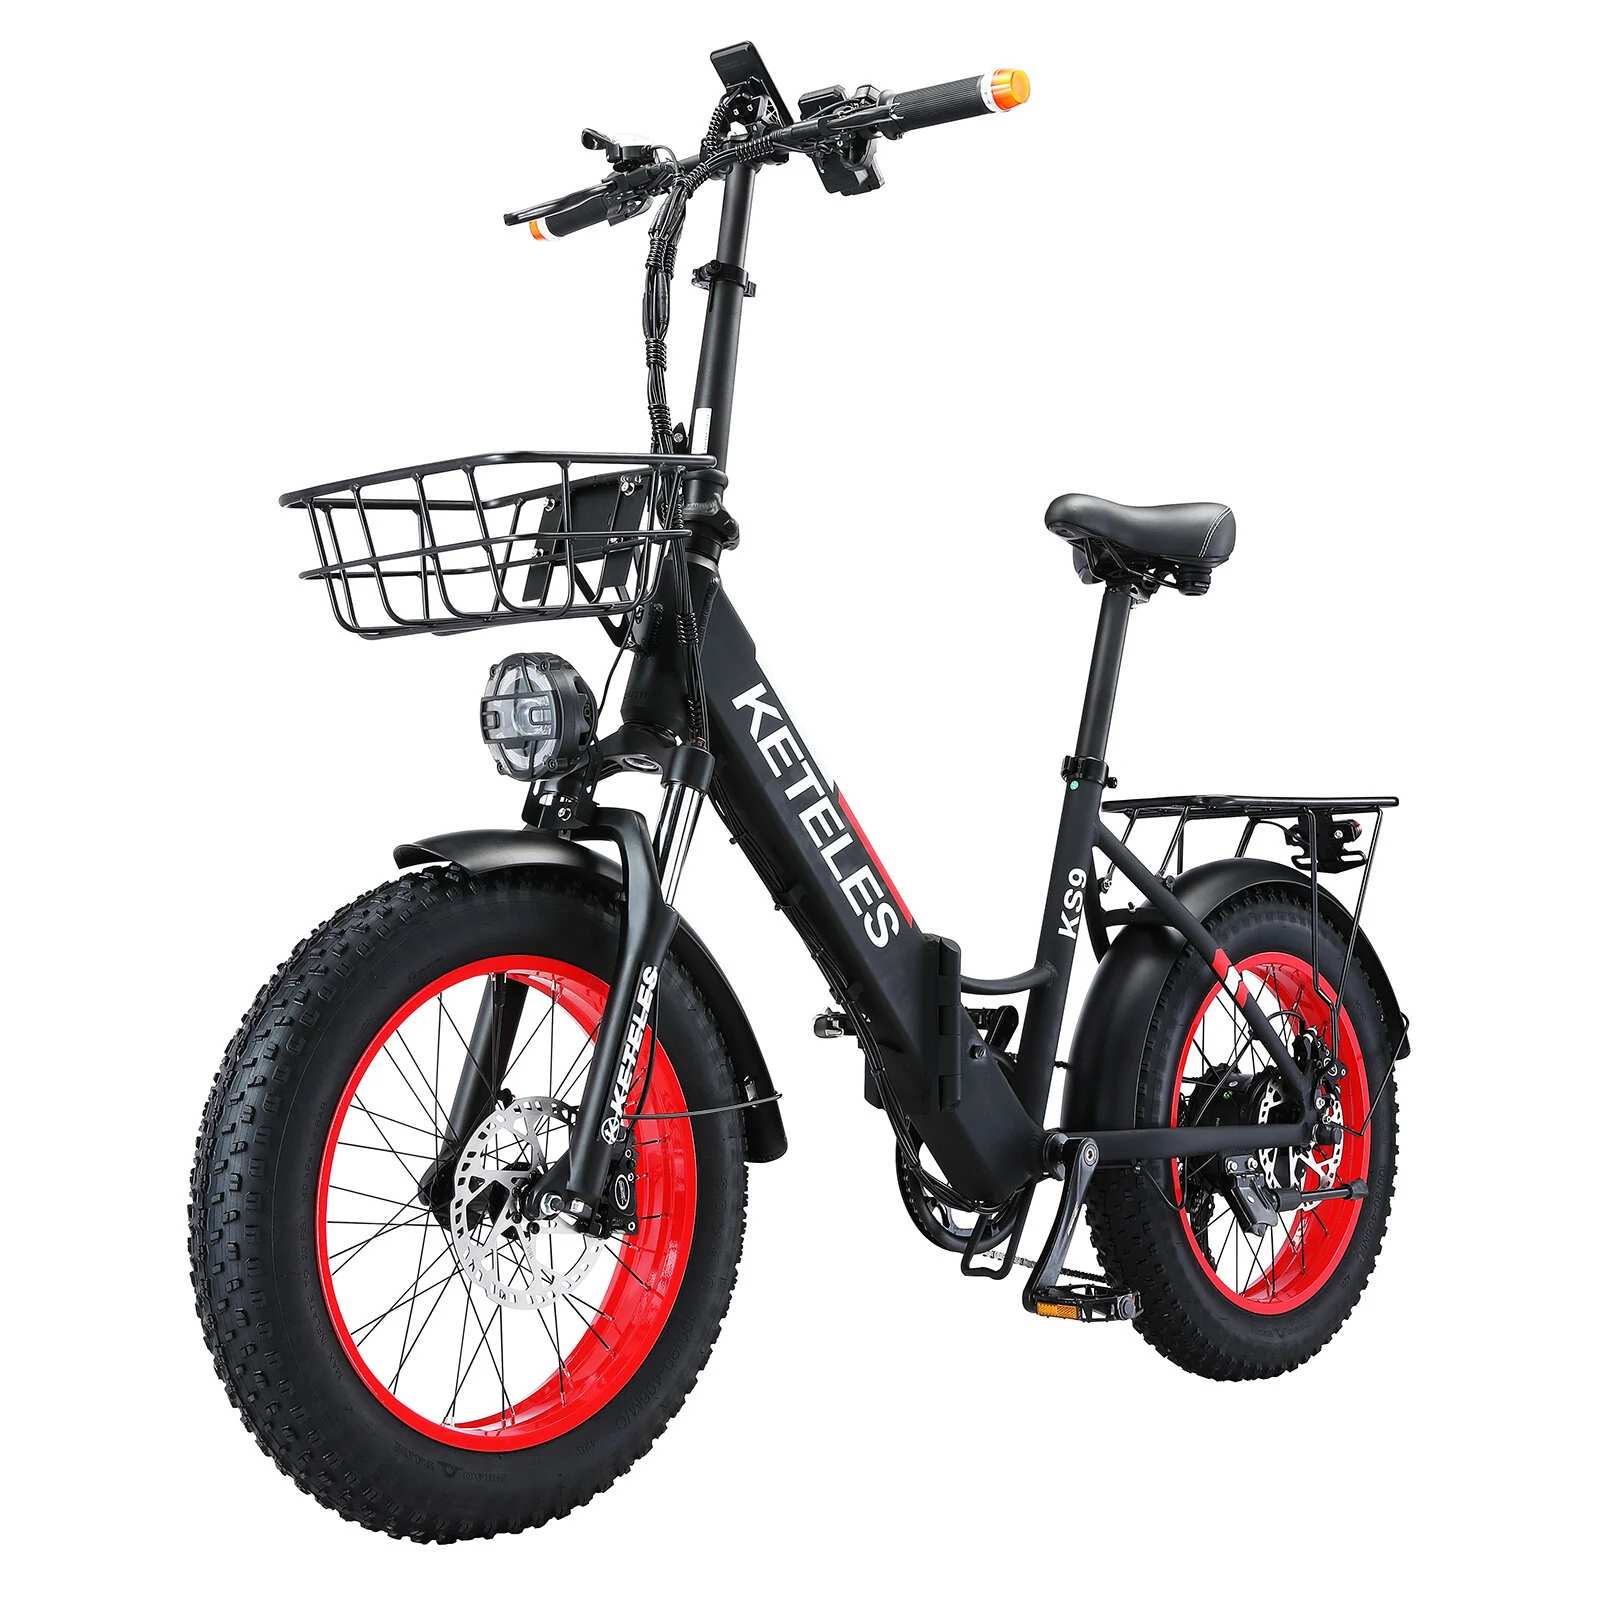 KETELES KS9 Electric Bicyle Banggood Coupon Promo Code (CZ Warehouse)